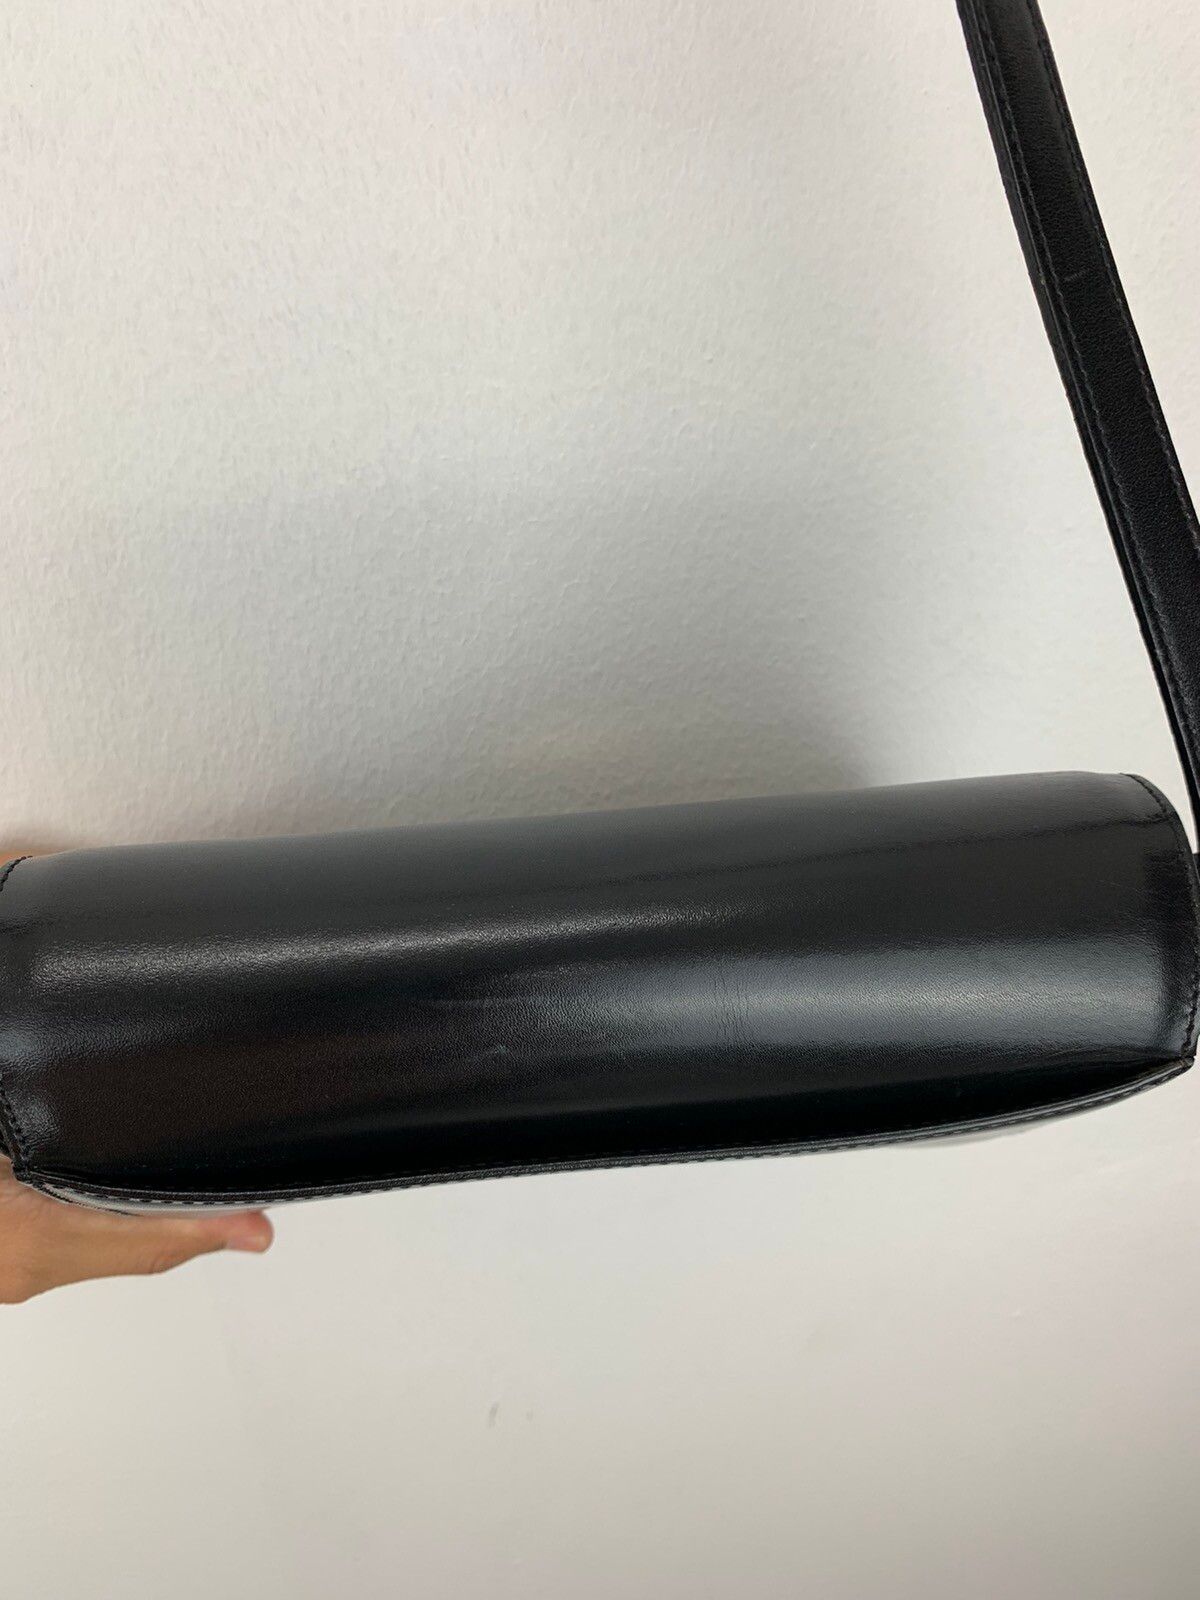 BALLY VINTAGE black leather hard shell bag antique bag Italy - 9